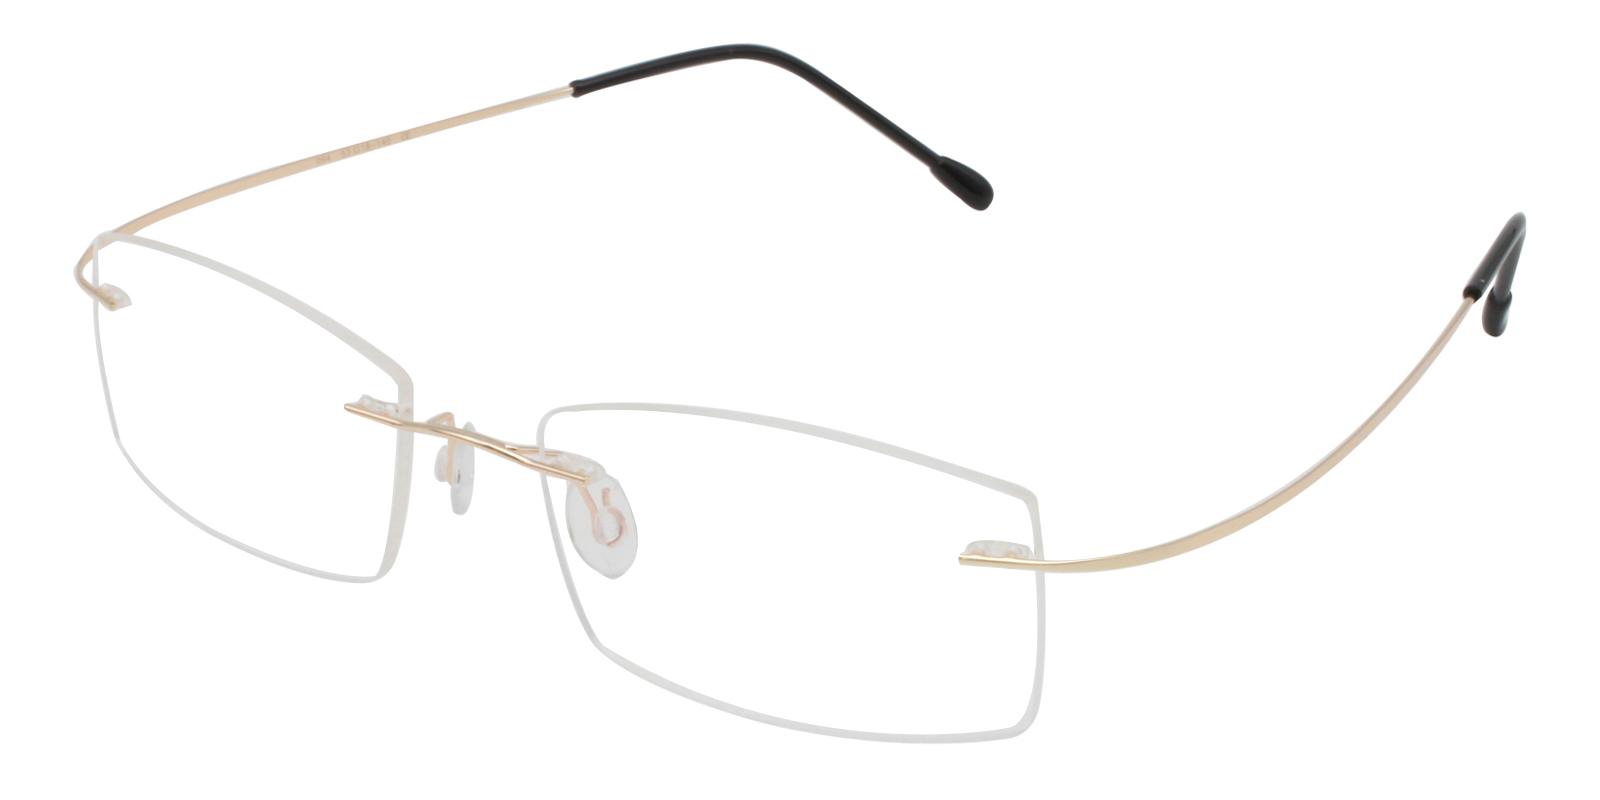 Pluto Gold Metal , Memory Eyeglasses , NosePads Frames from ABBE Glasses